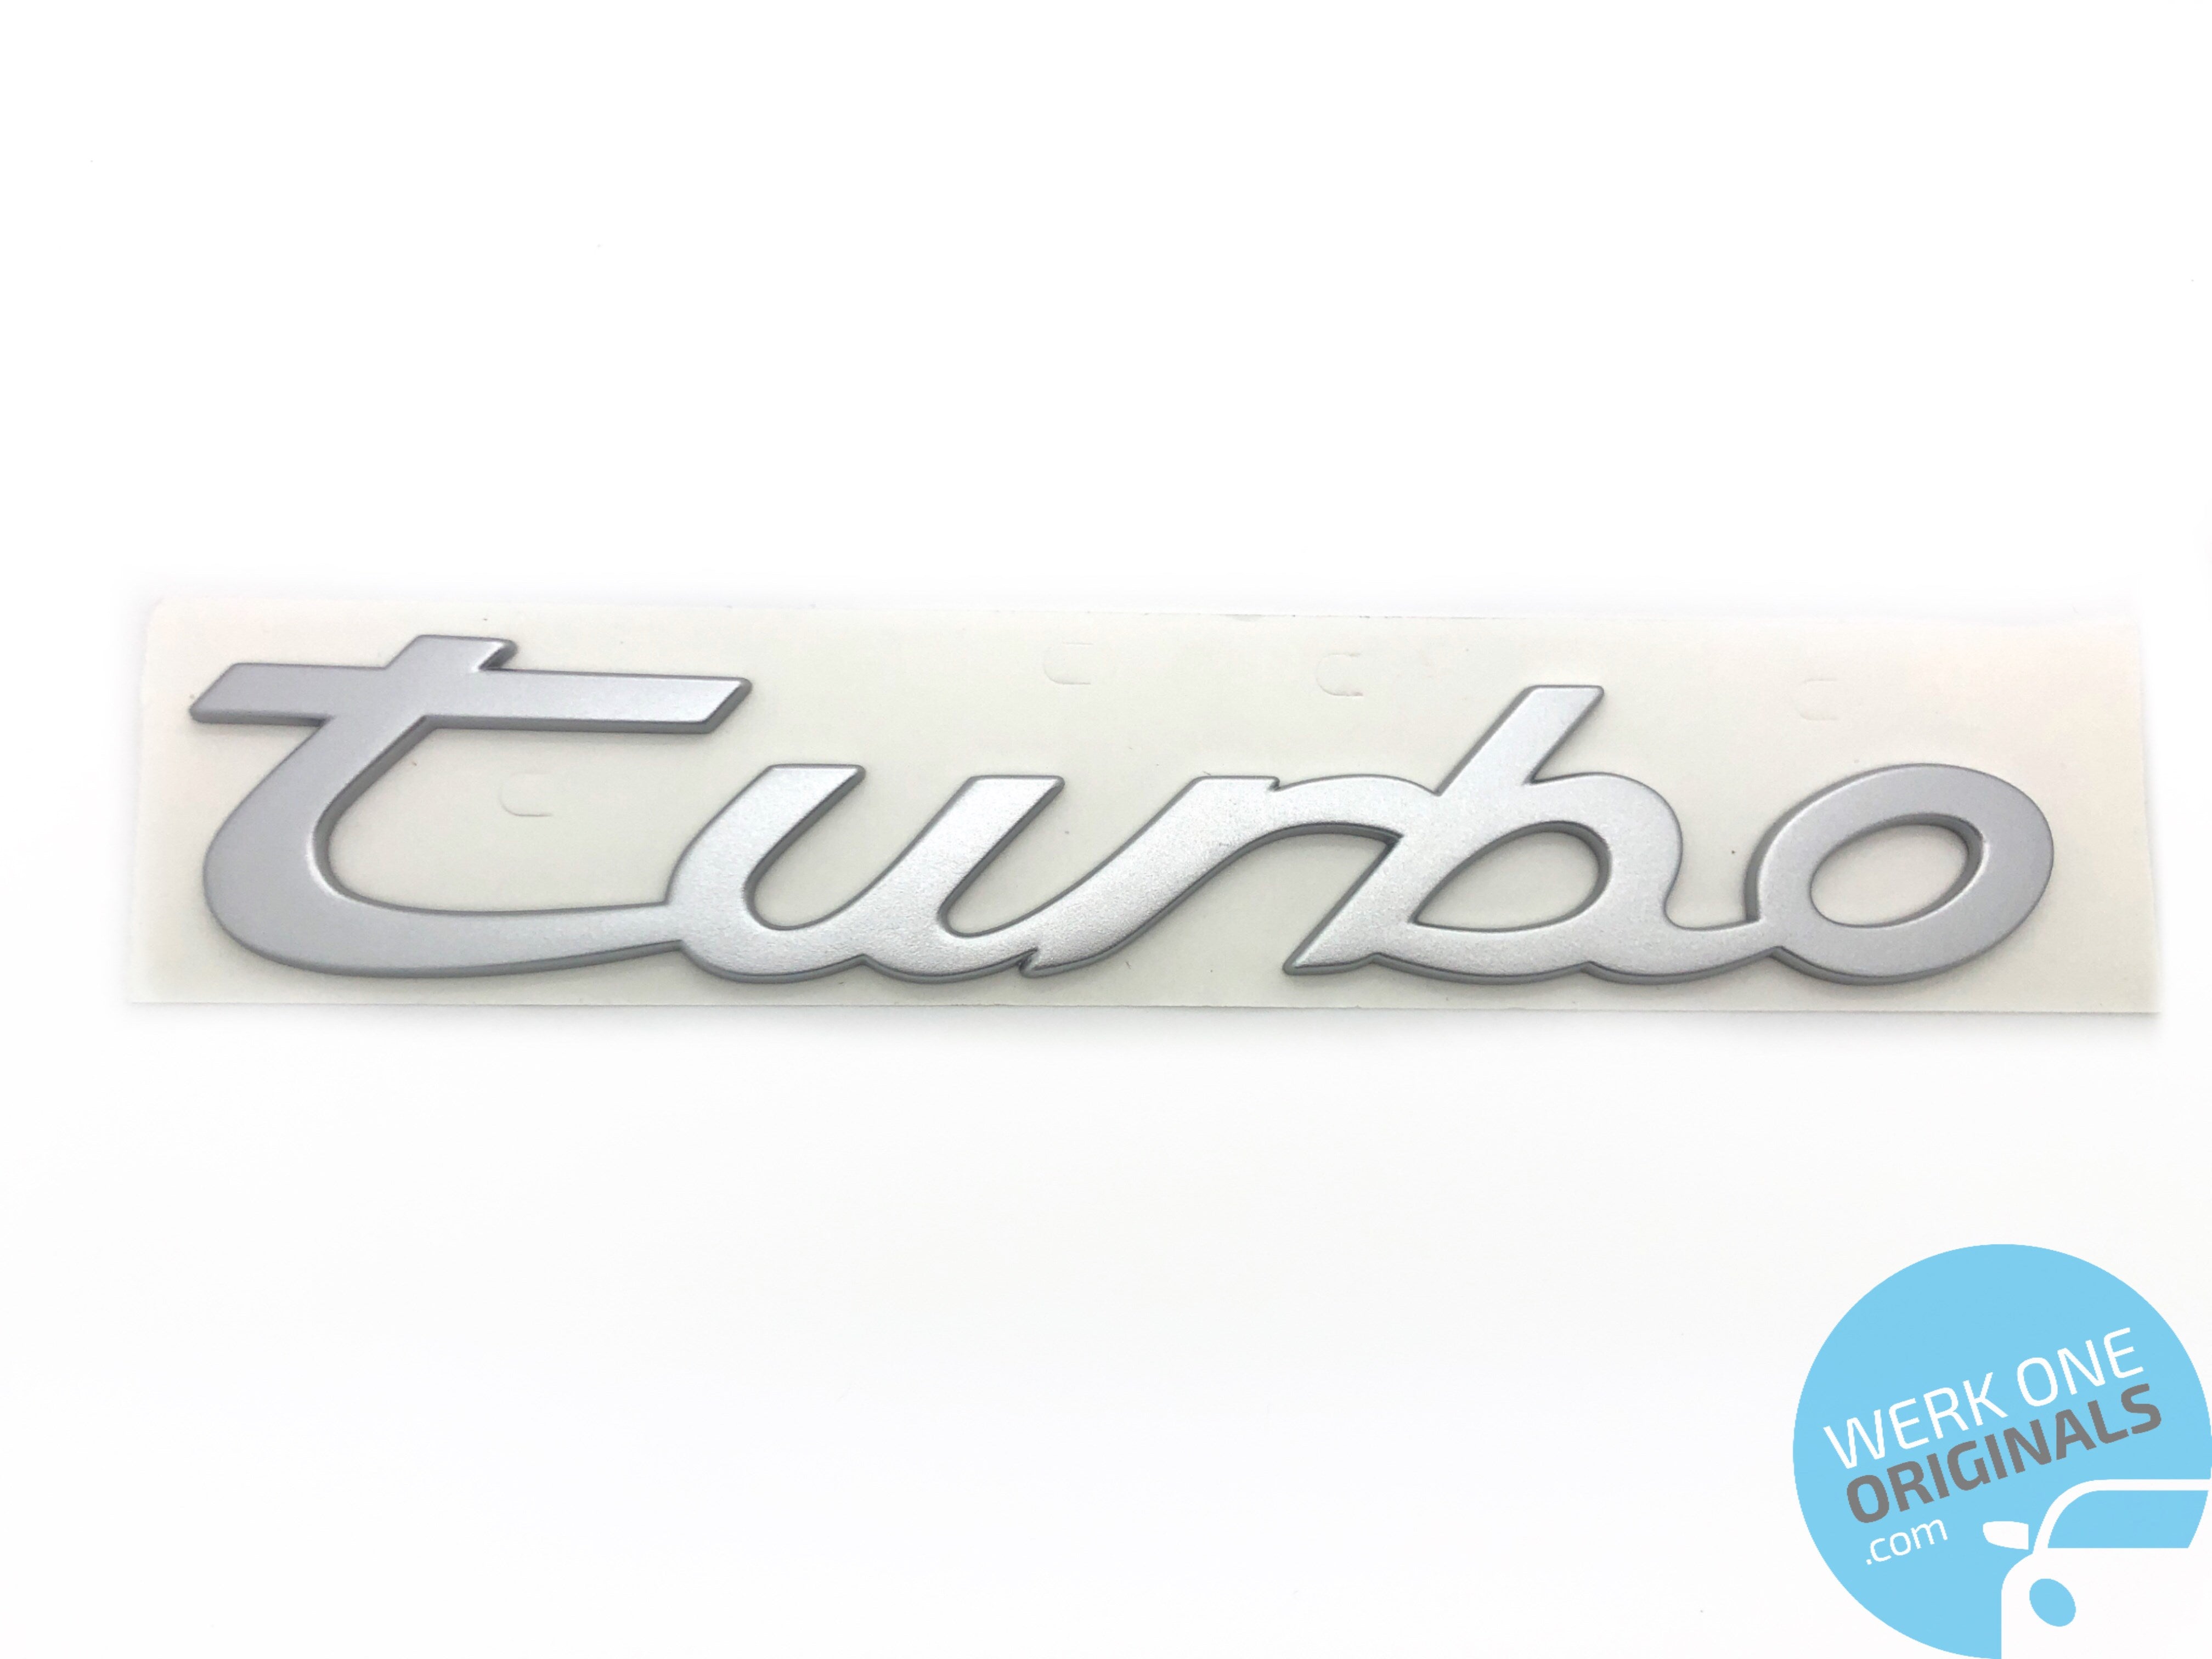 Porsche 'Turbo' Rear Badge in Silver for 944 Turbo Models